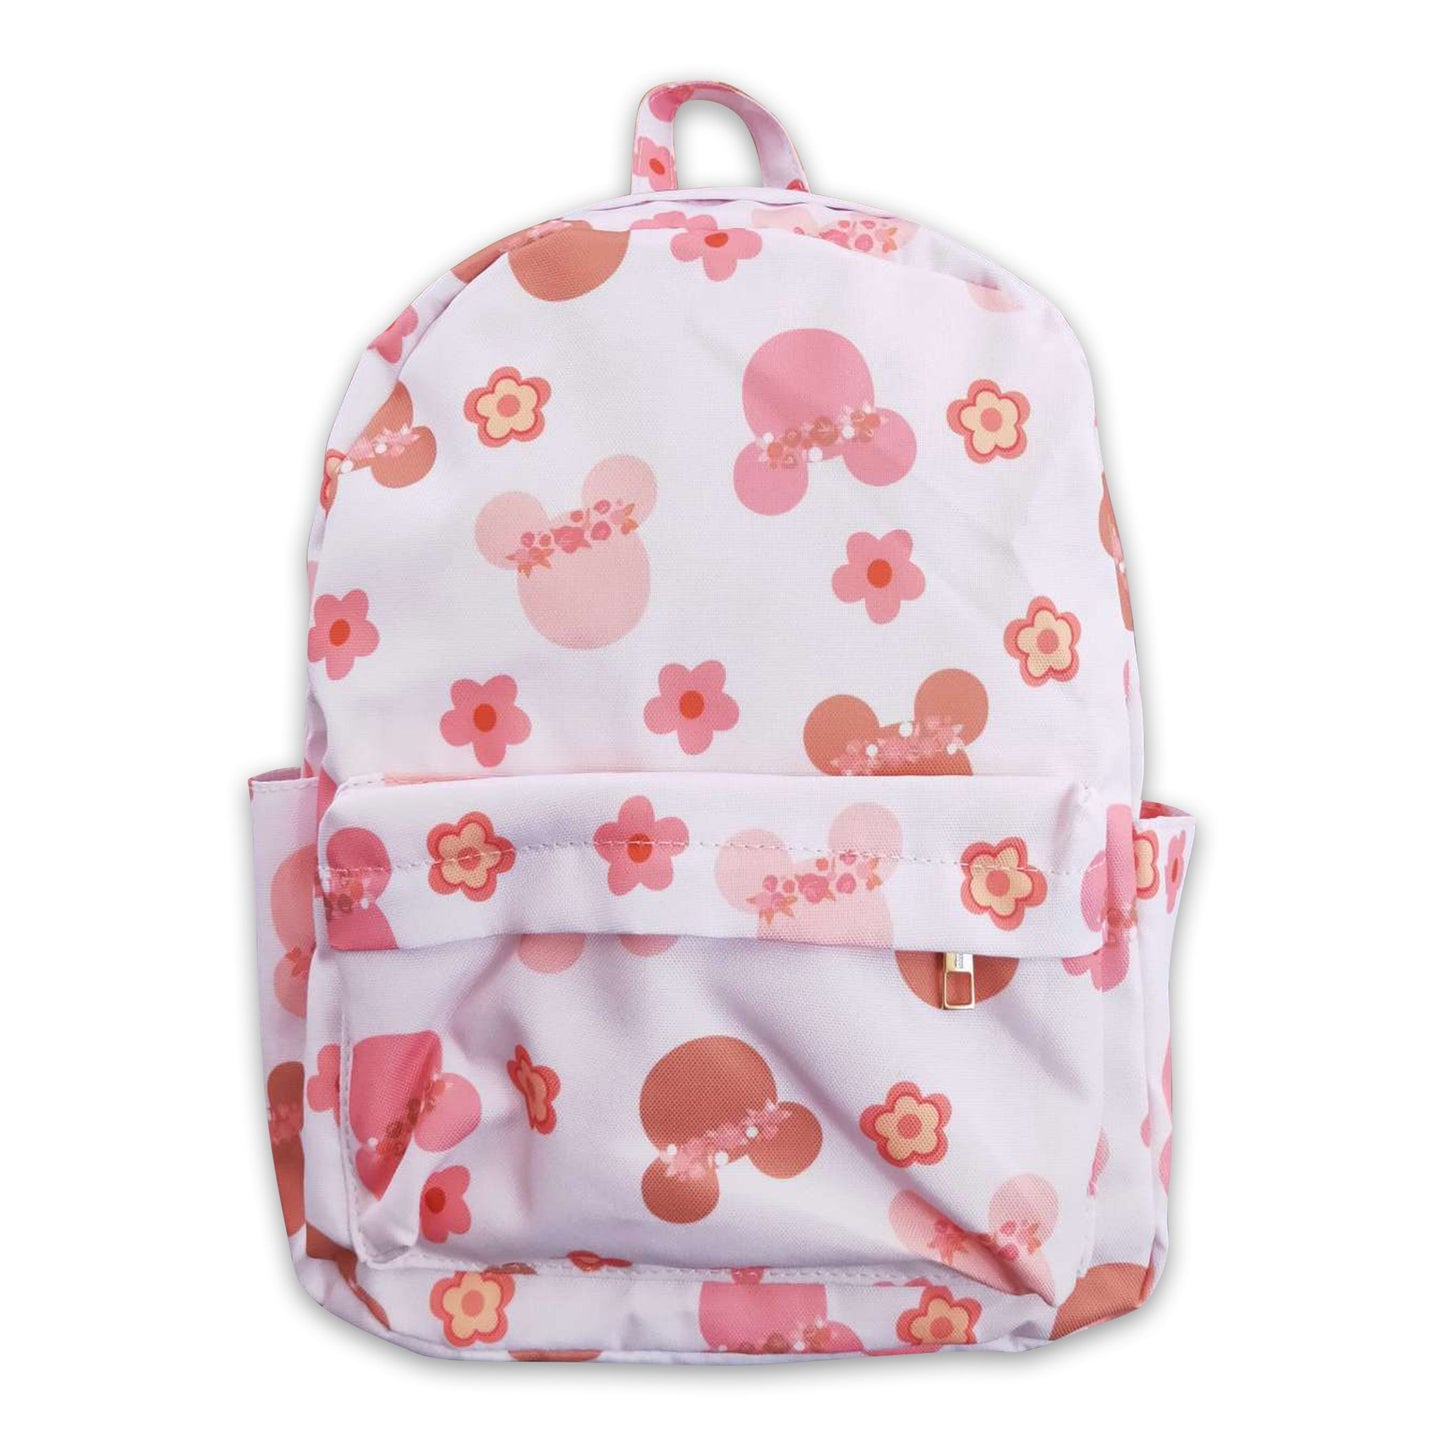 Floral mouse kids girls backpack